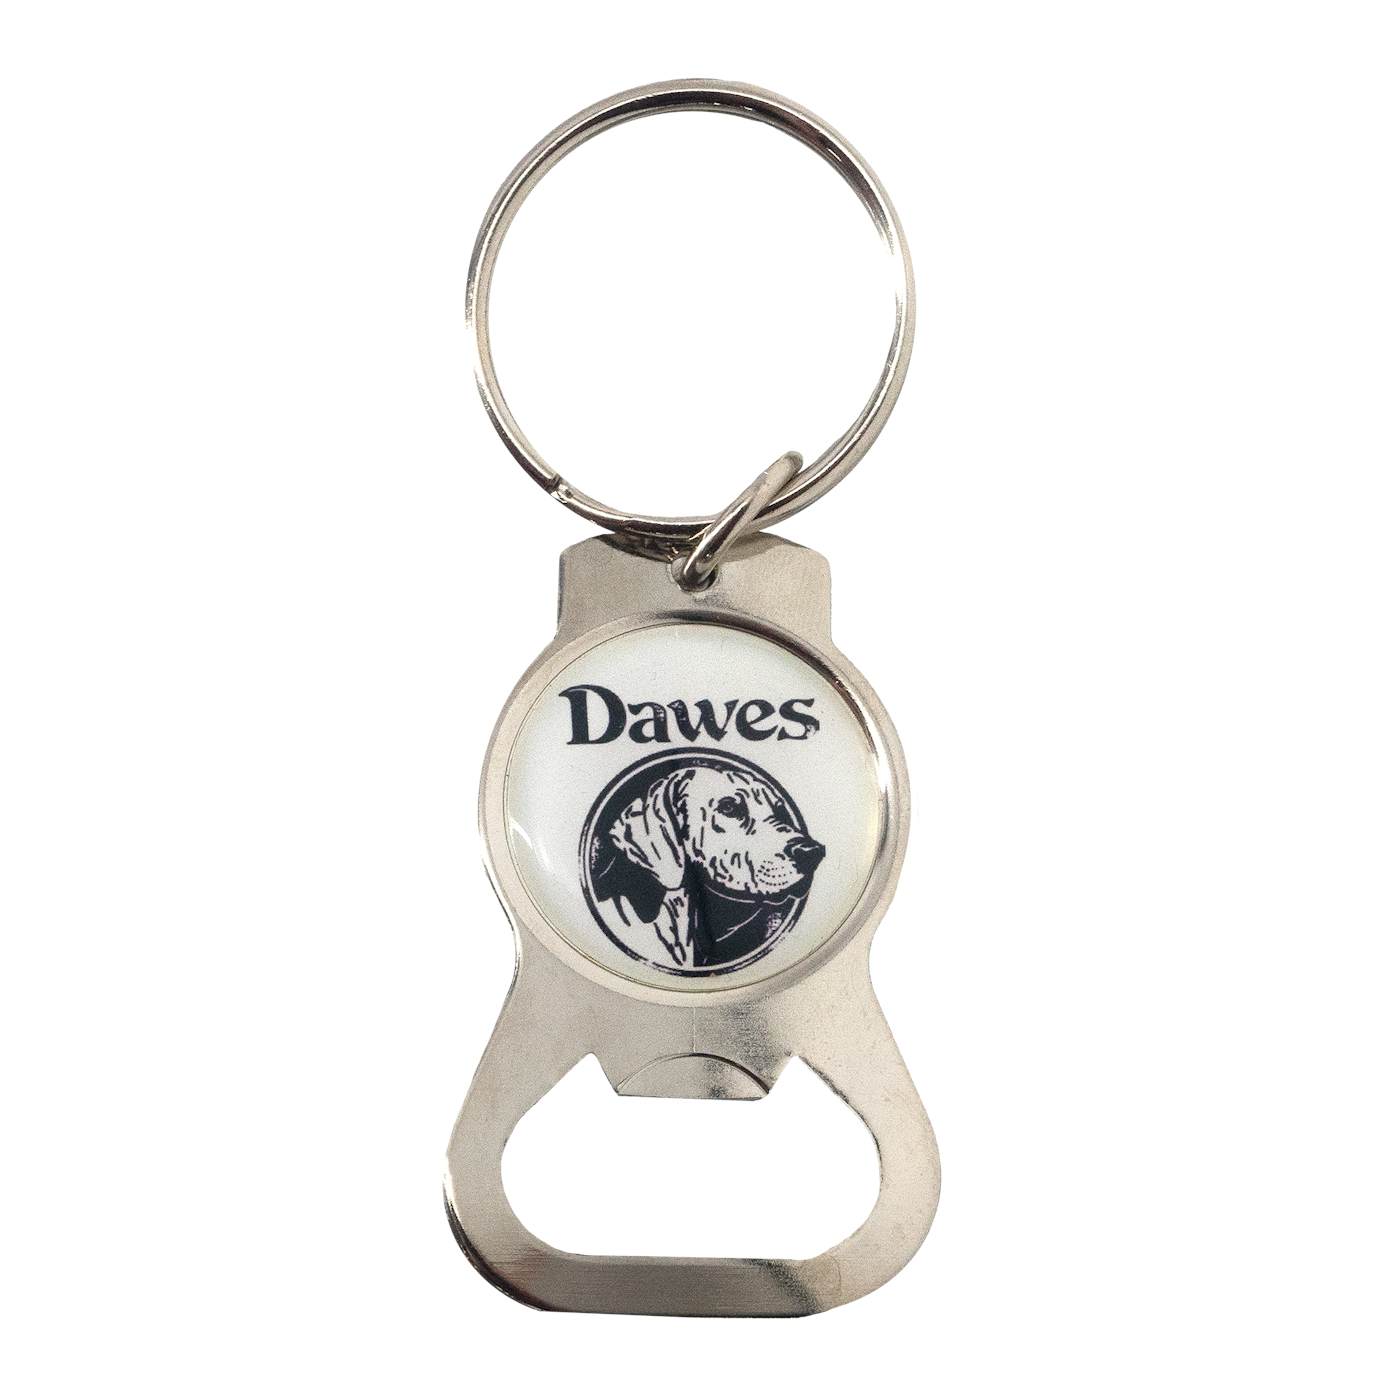 Dawes - Bottle Opener Keychain